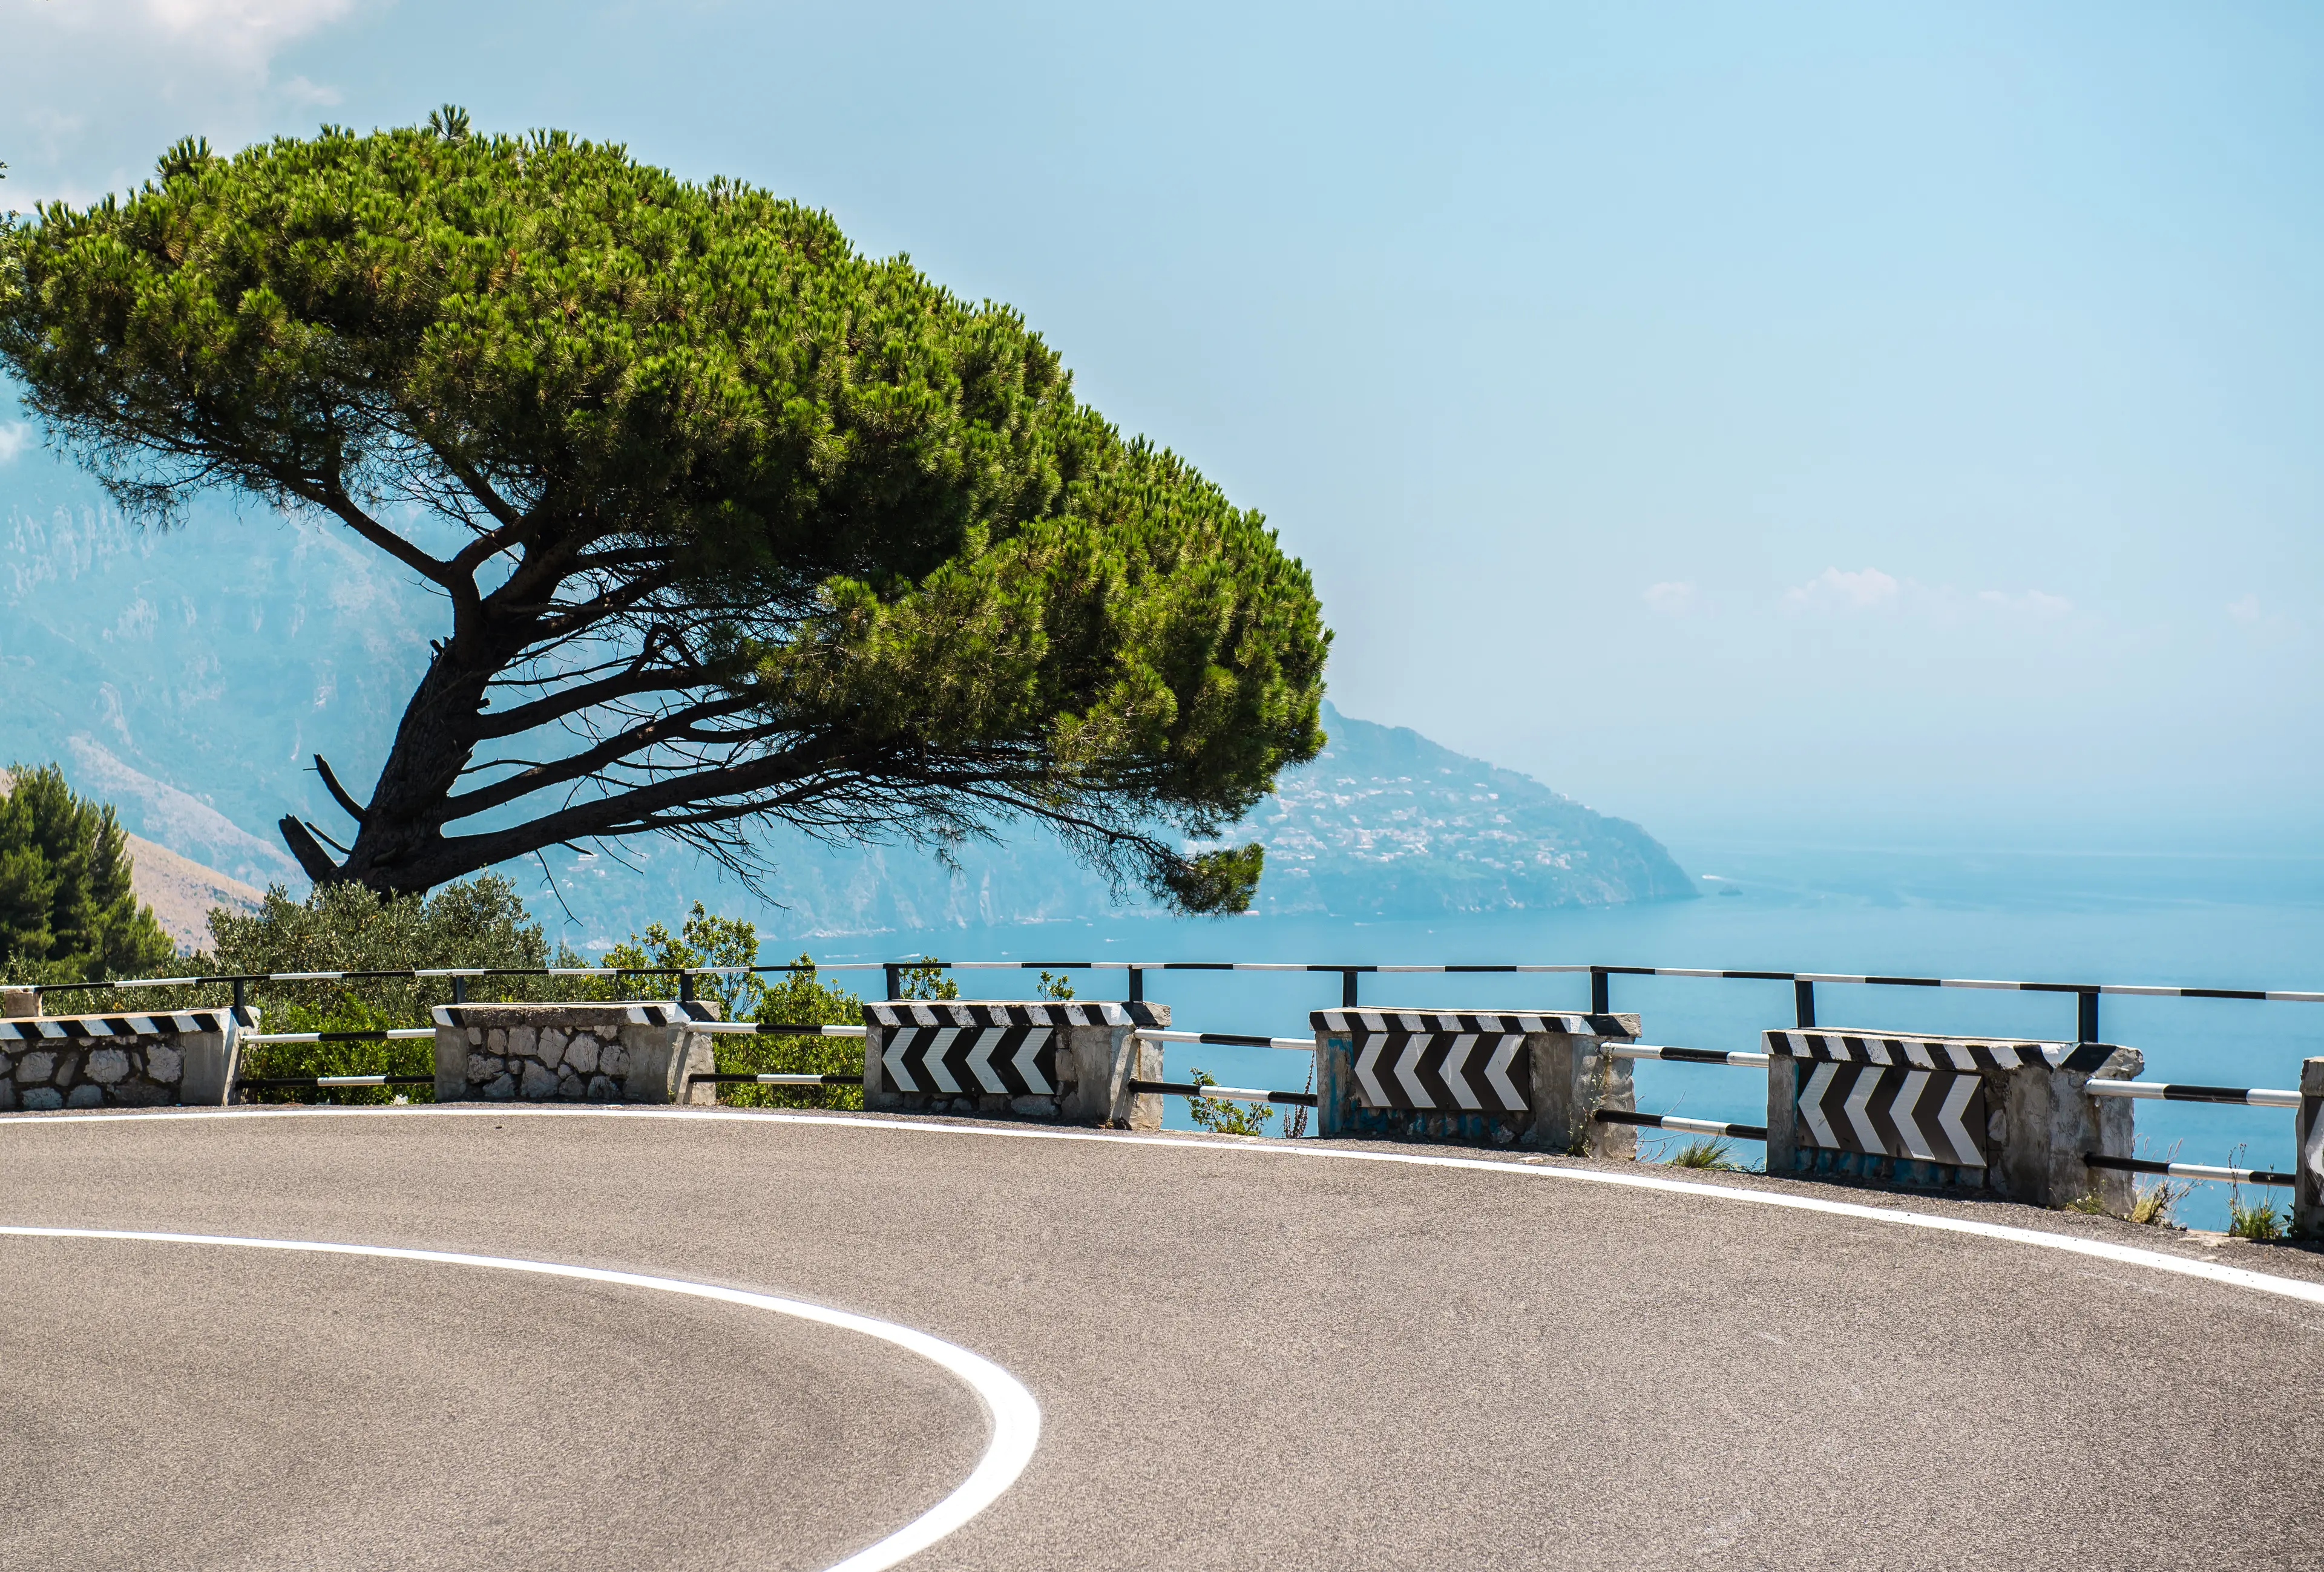 Scenic drive along the Amalfi Coast